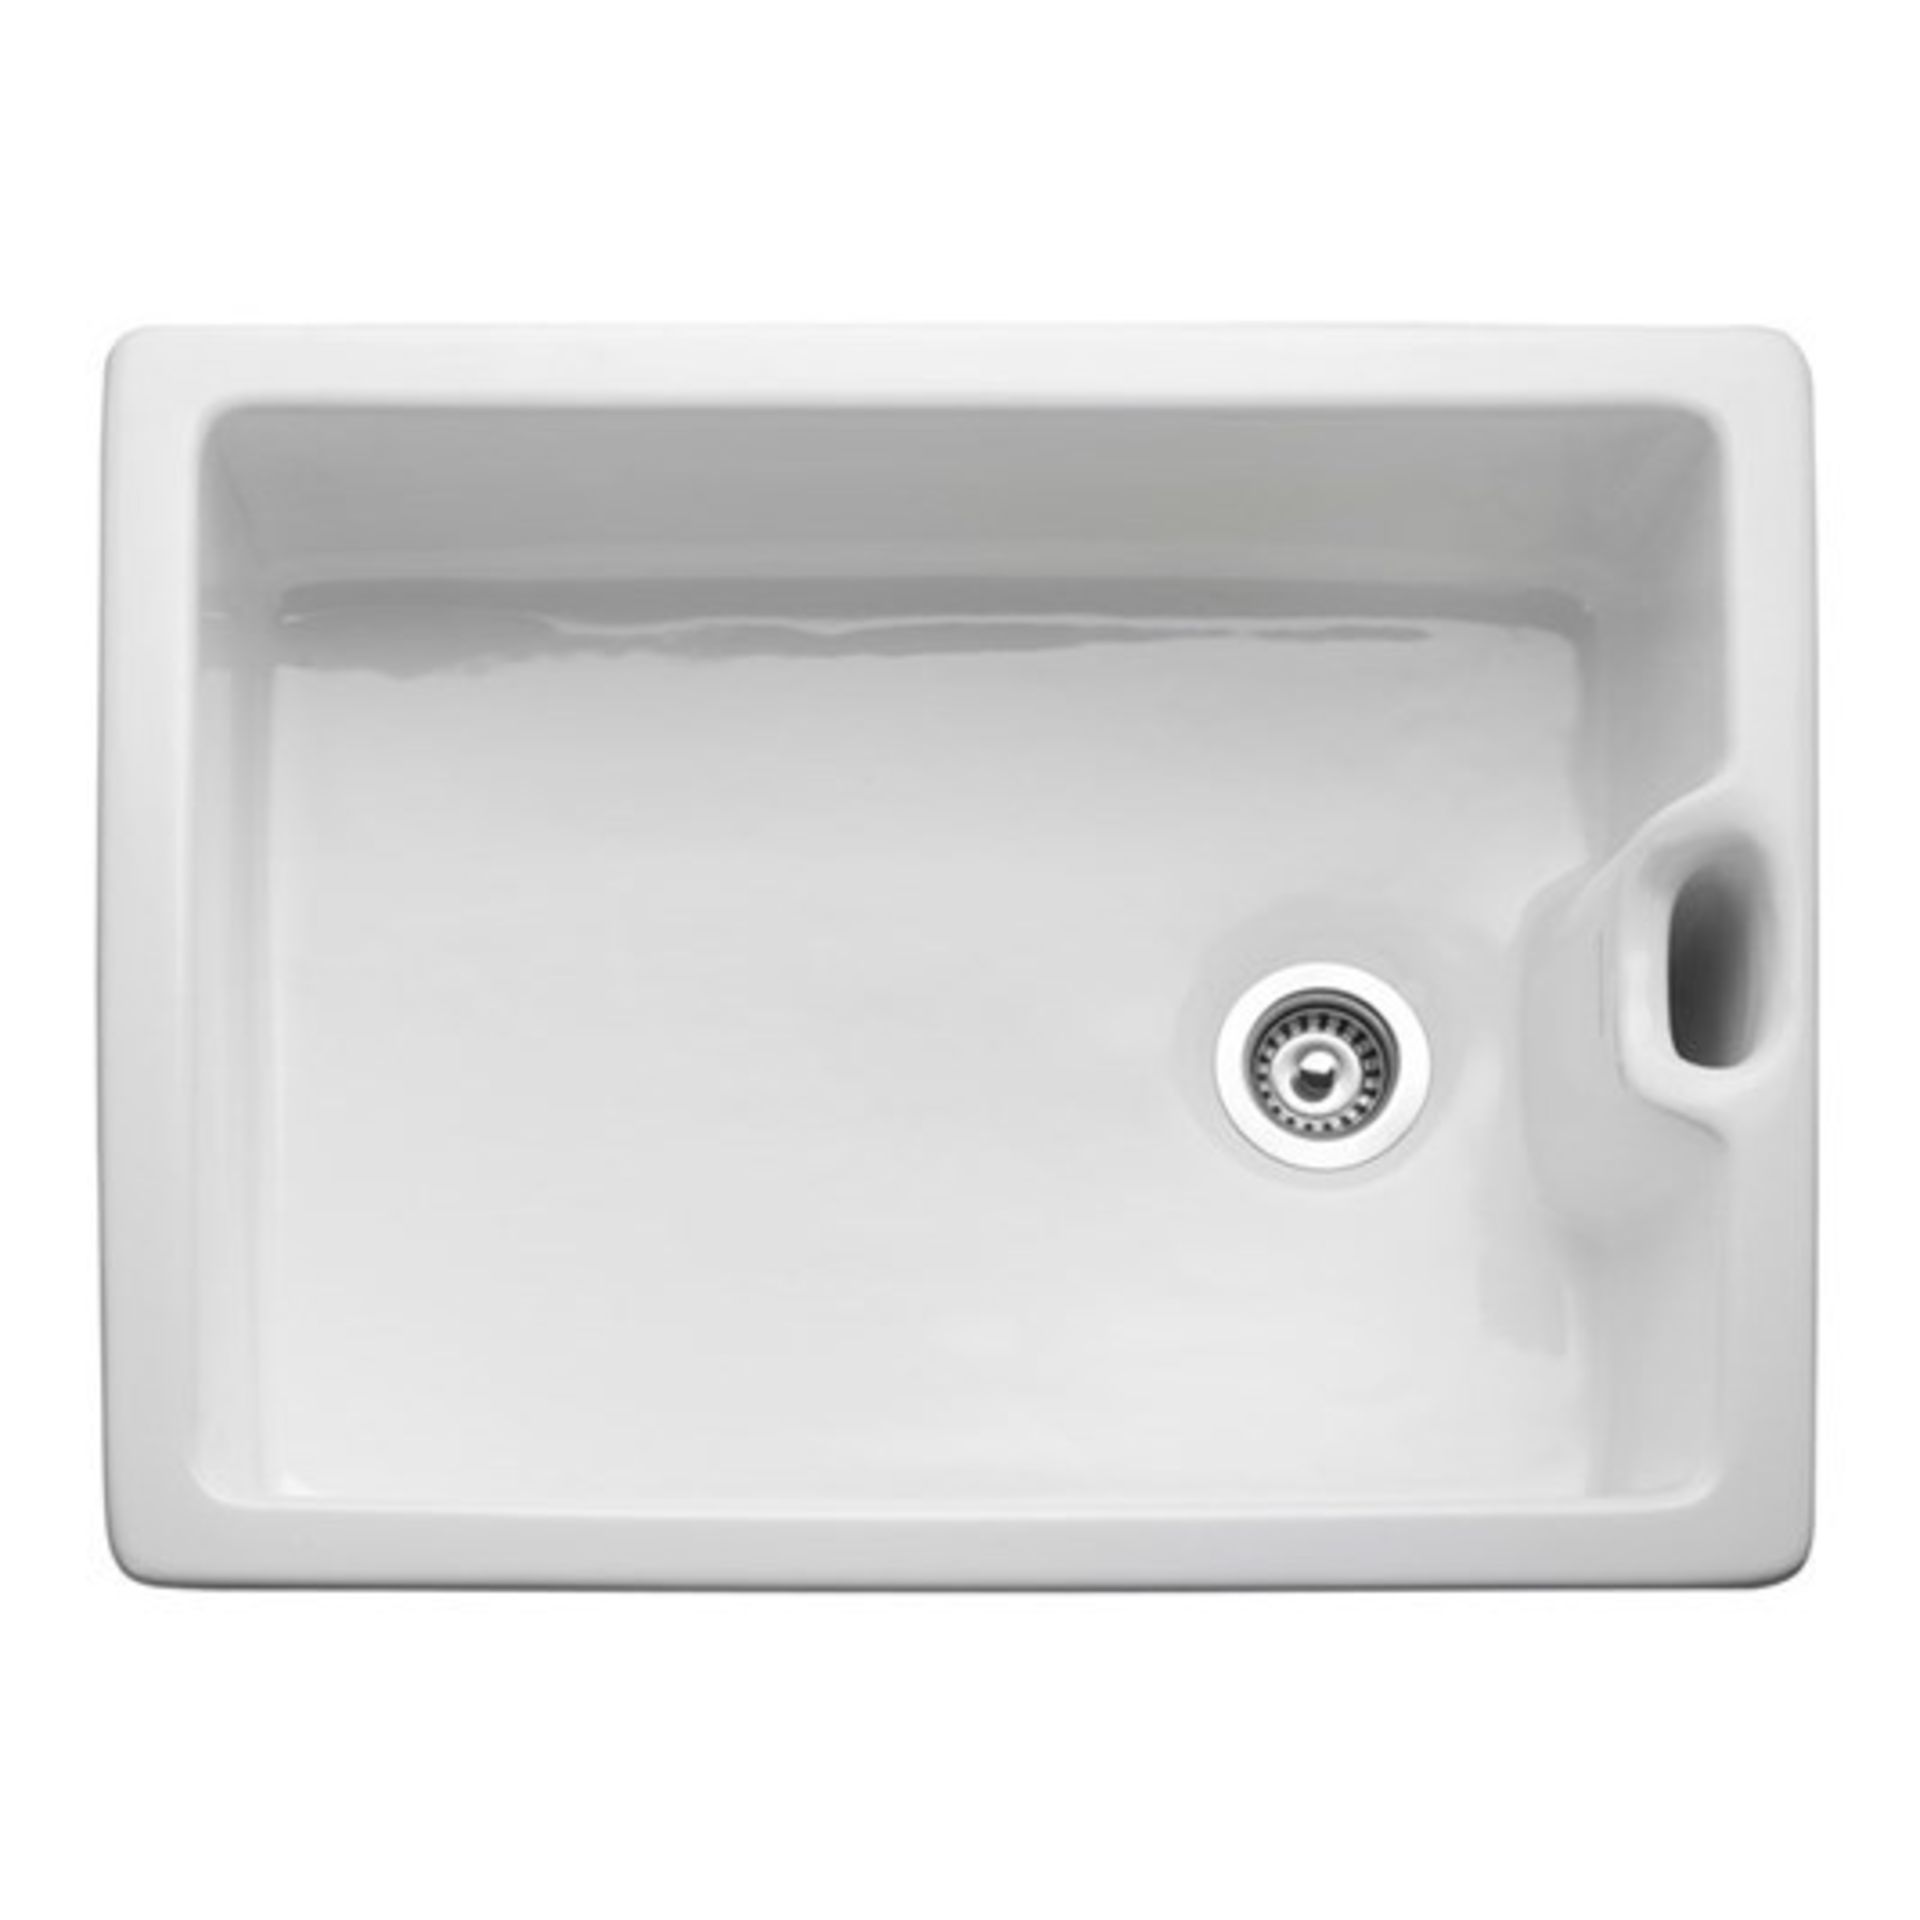 (RR153) Ceramics Classic Belfast 1 Bowl White Fire Clay Ceramic Kitchen Sink - 595 x 455mm . - Image 3 of 3